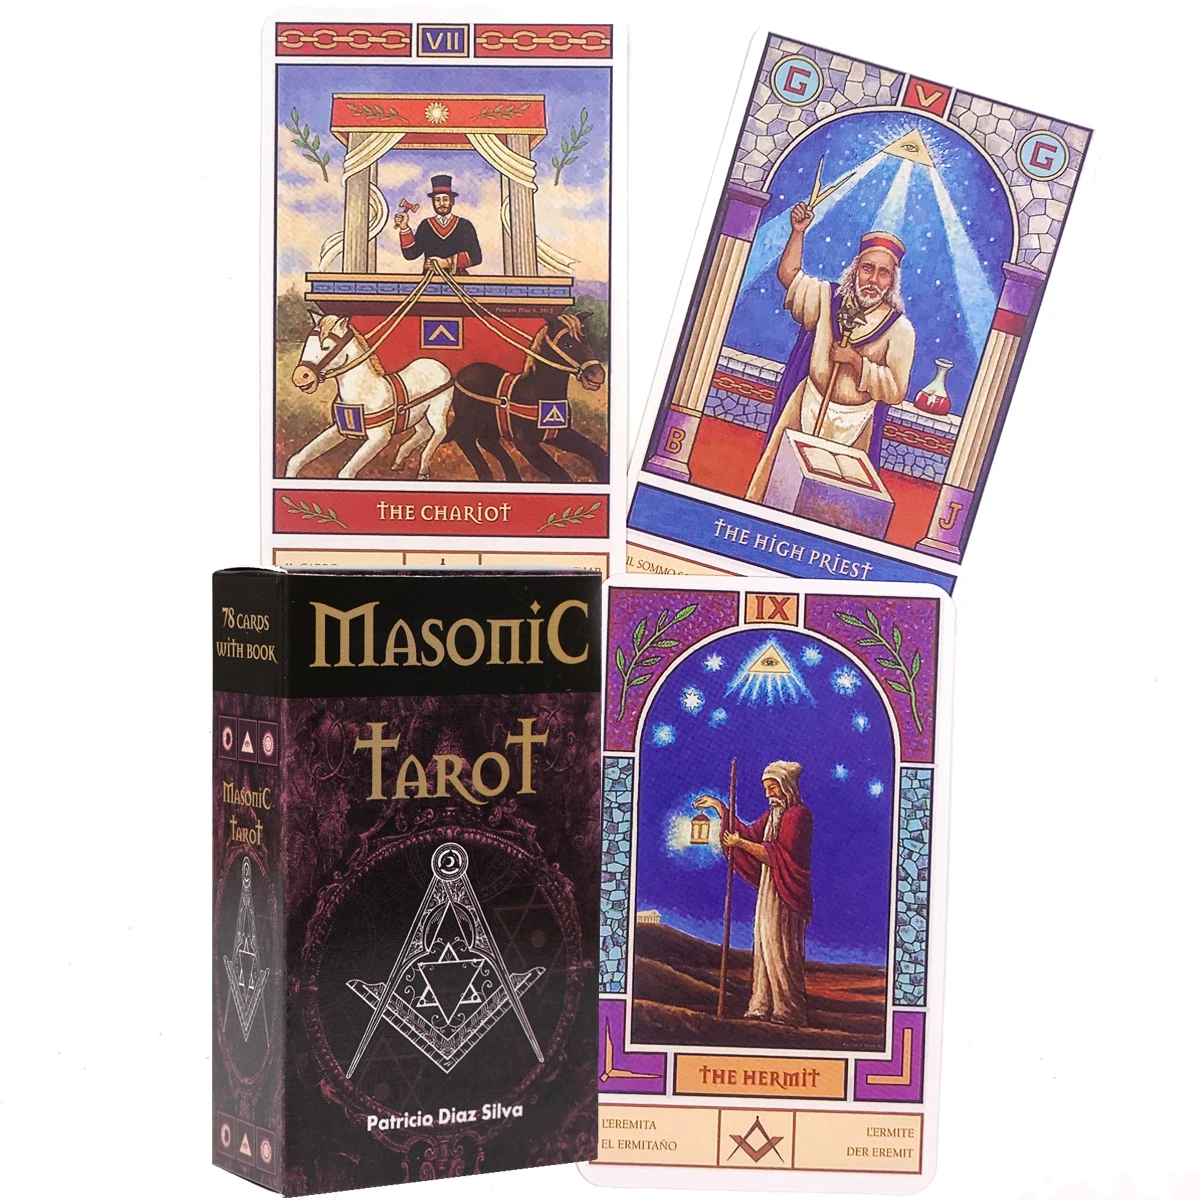 

The New English Tarot Family Gathering Divination Card Masonic Tarot By Patricio Diaz Silva Game Is Worth Having